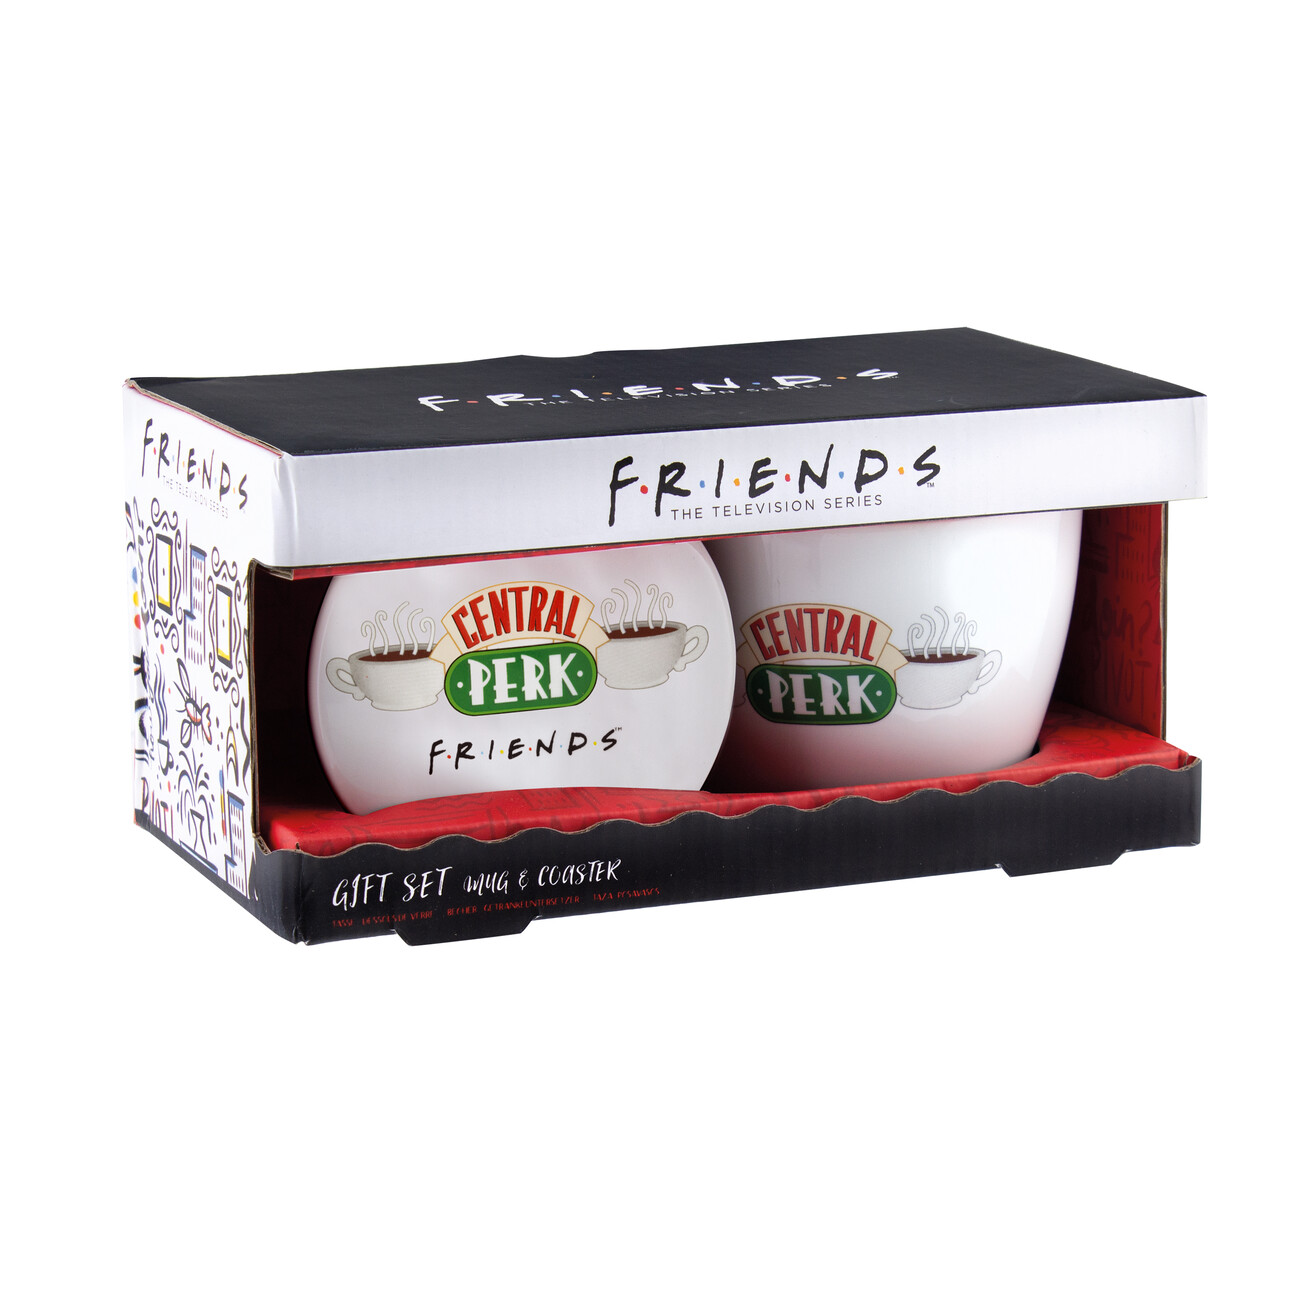 Friends Central Perk Gift Set